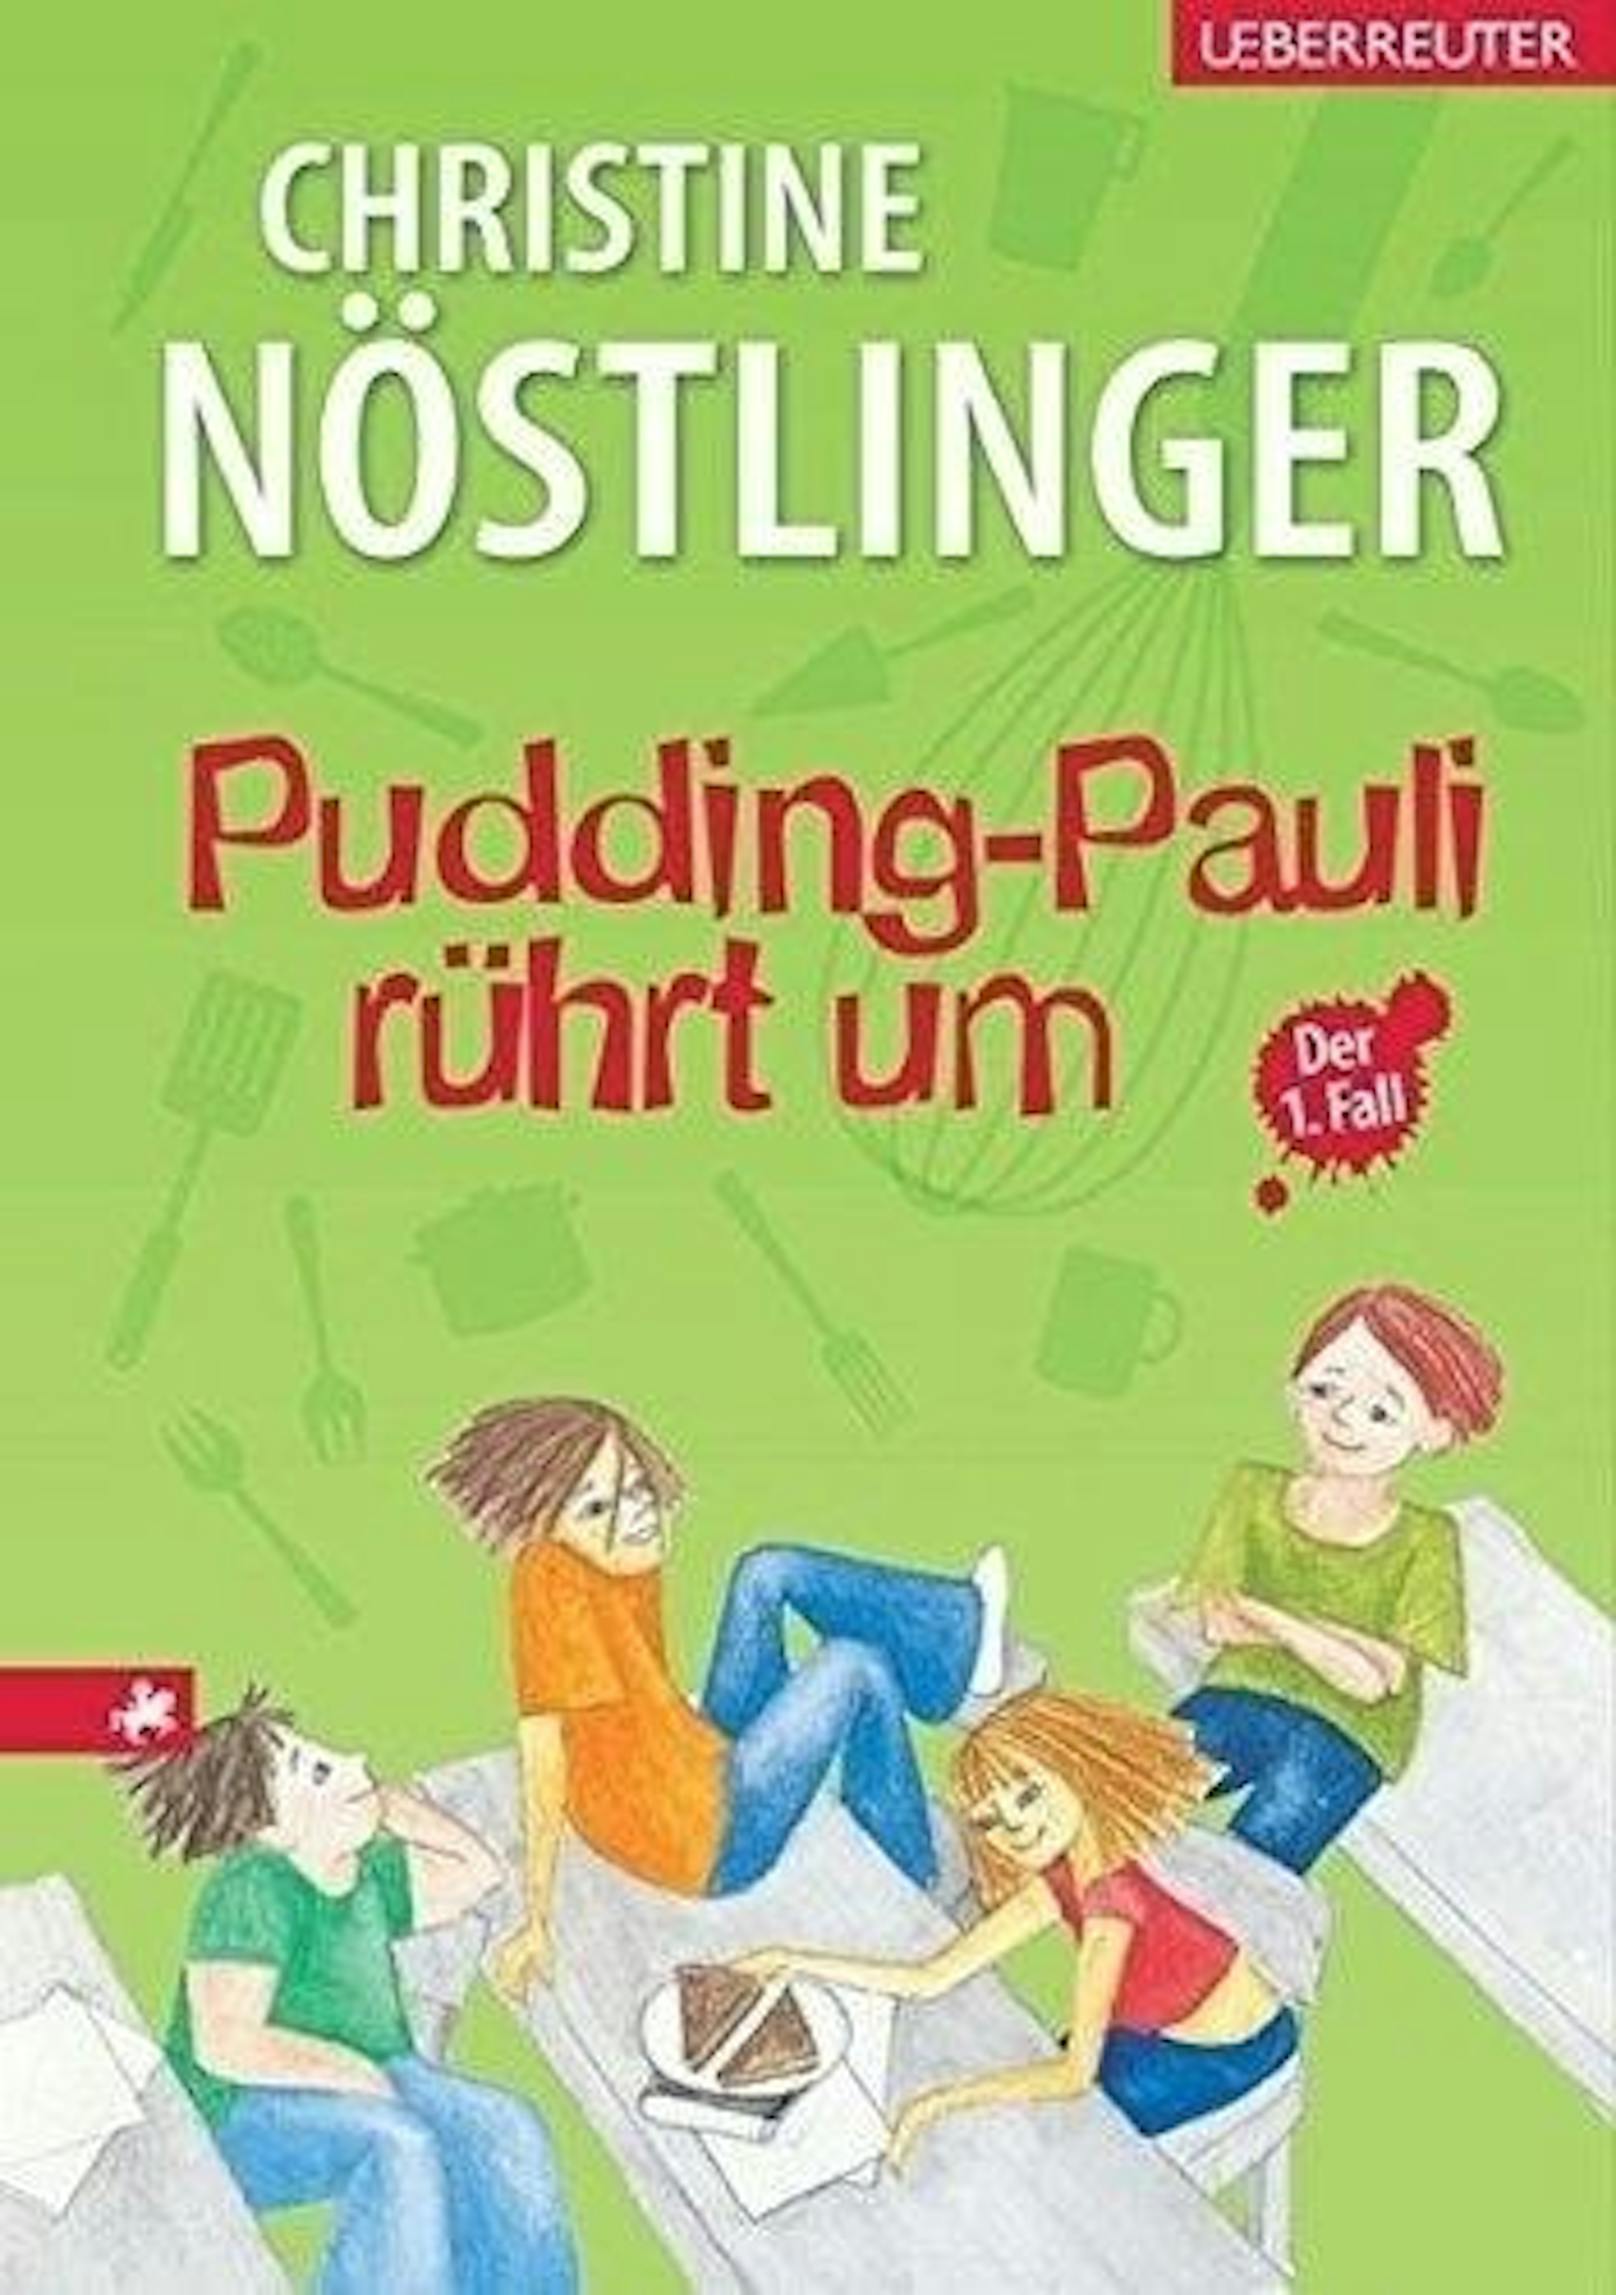 Pudding-Pauli rührt um, 2009